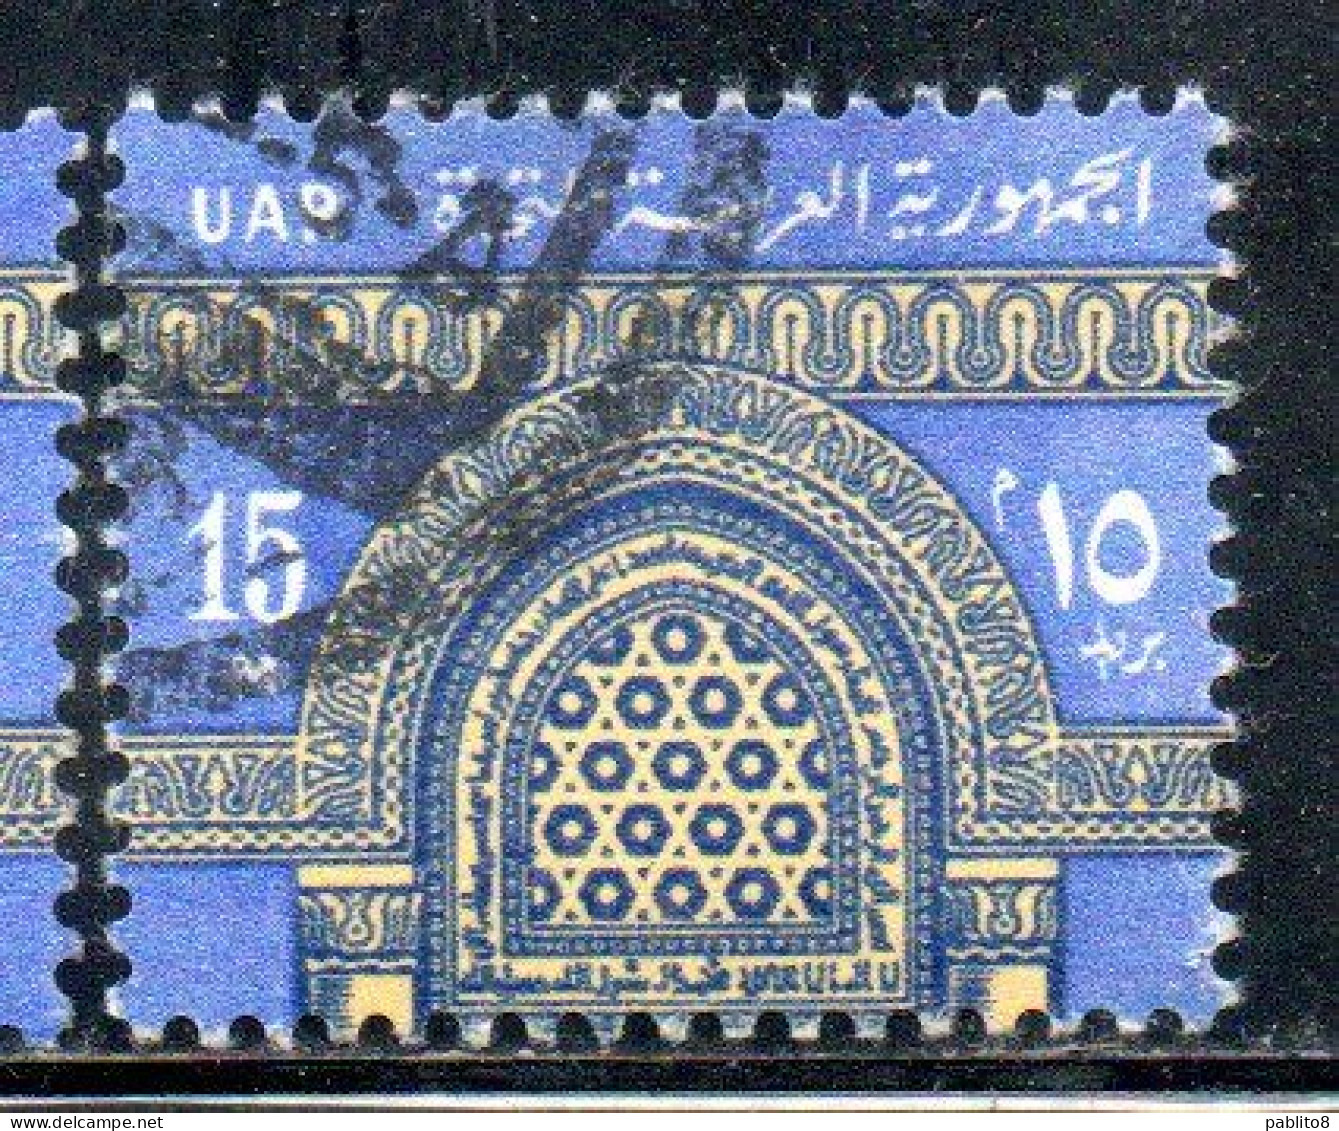 UAR EGYPT EGITTO 1964 1967 WINDOW IBN TULUN'S MOSQUE 15m USED USATO OBLITERE' - Used Stamps